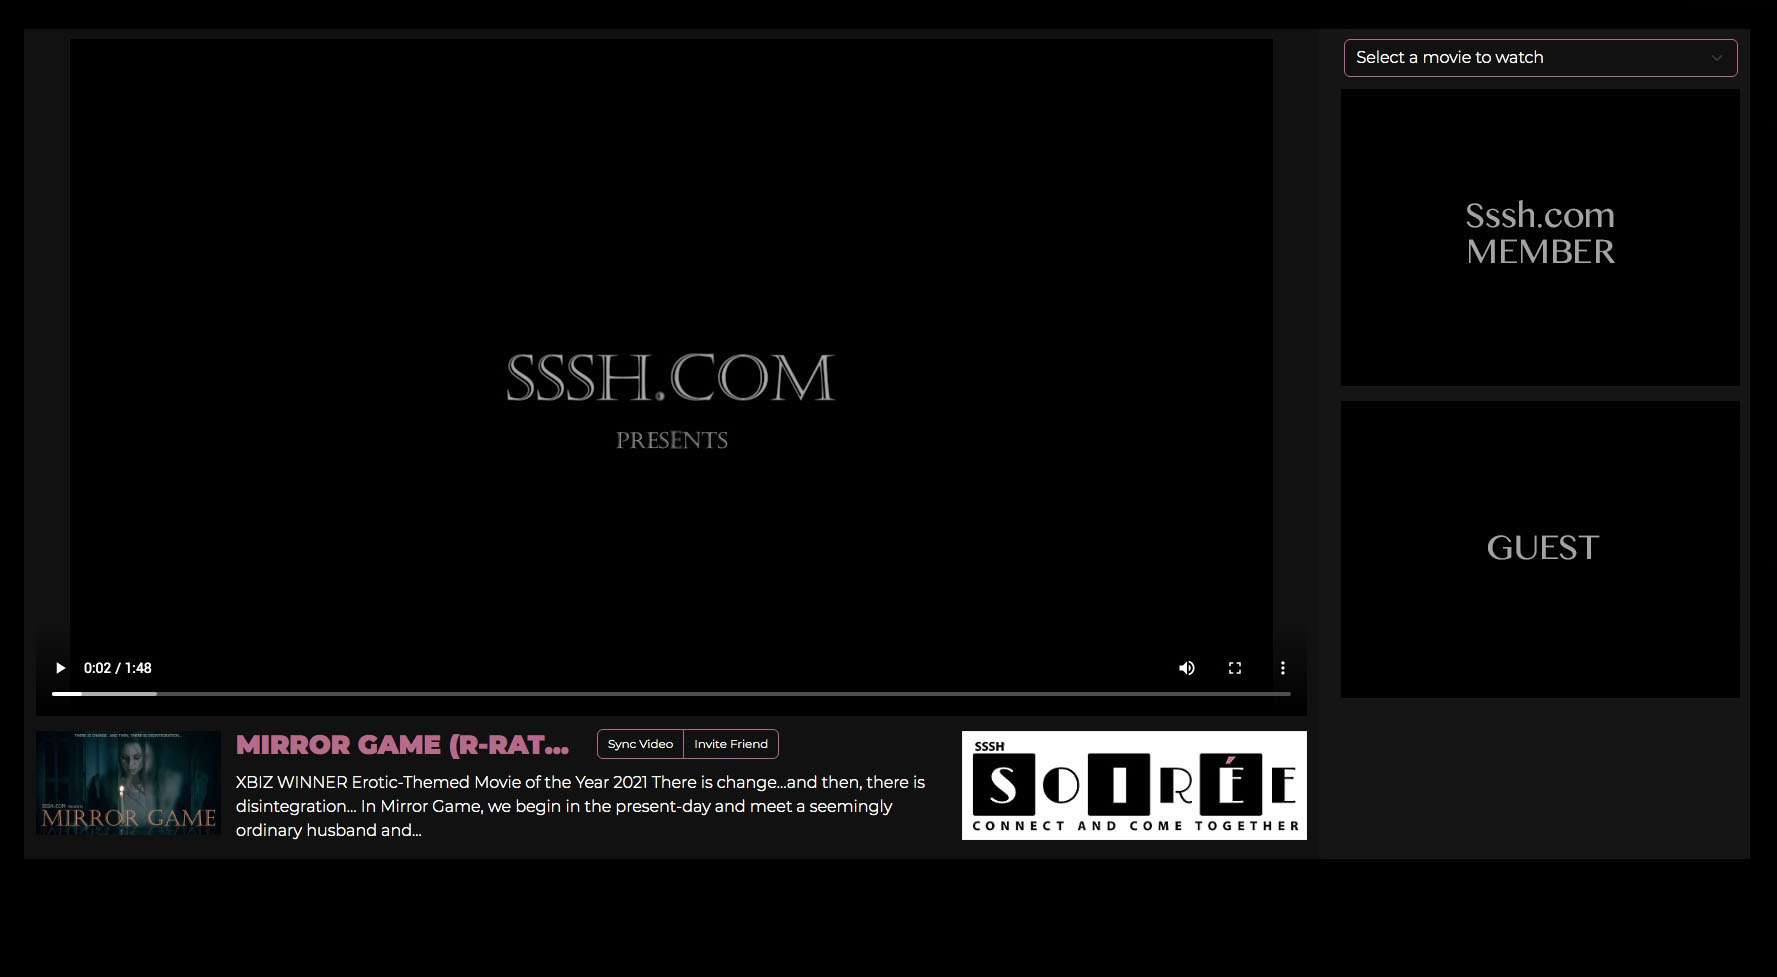 Sssh.com Soiree